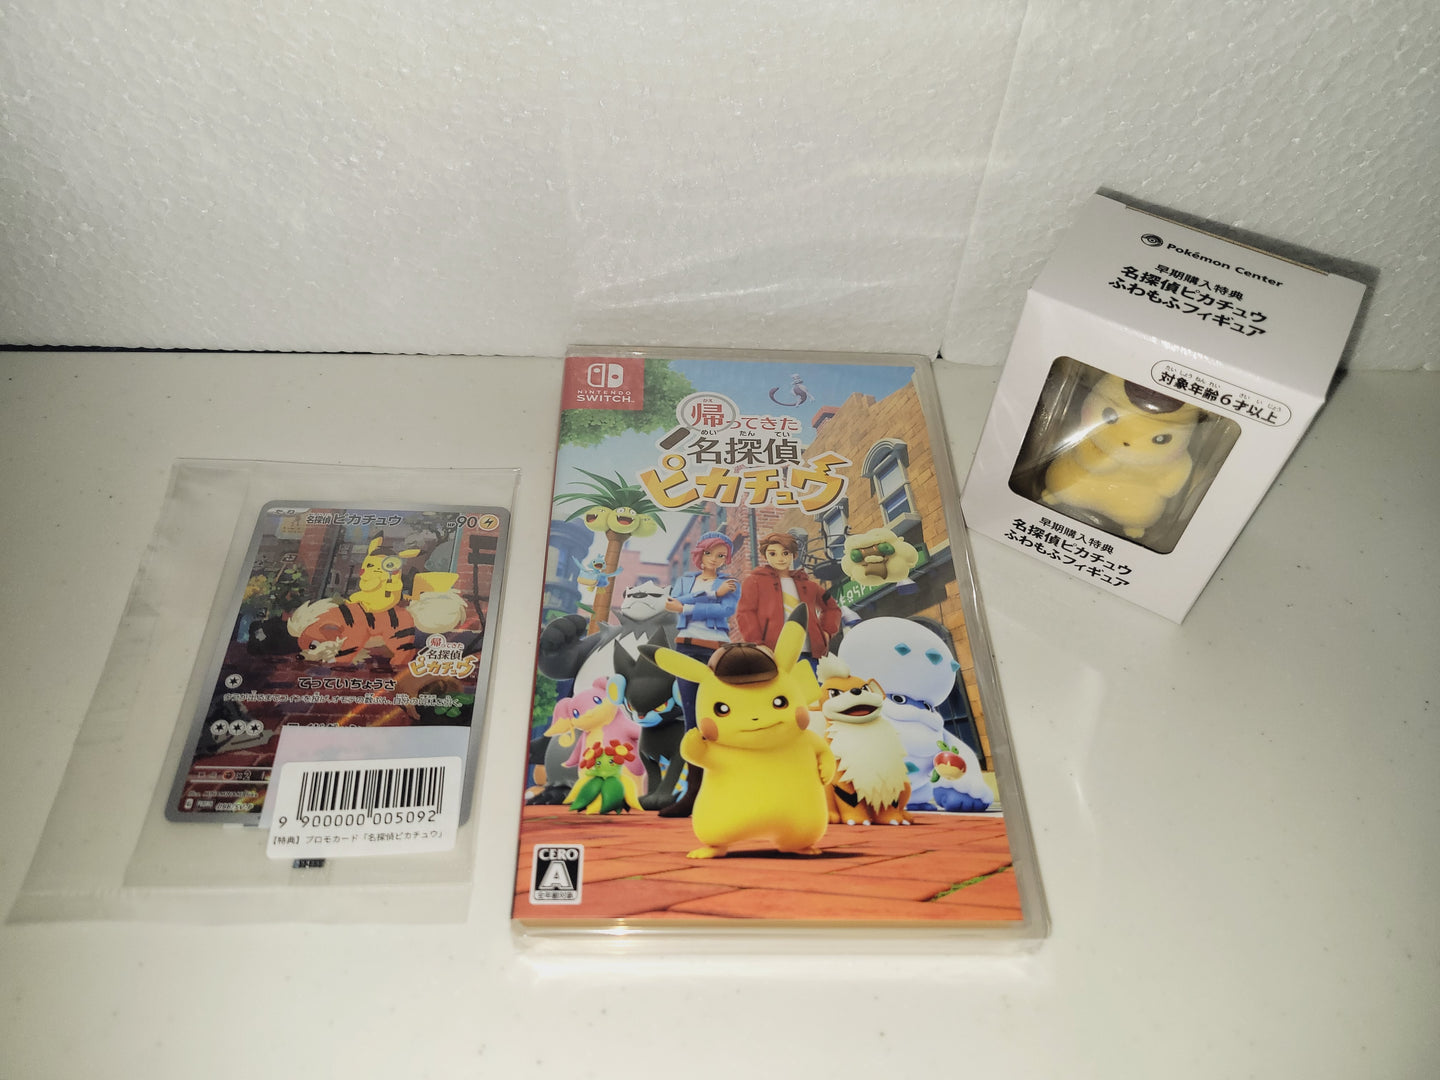 Detective Pikachu Returns with Pokemon Center Preorder Bonus - Nintendo Switch NSW